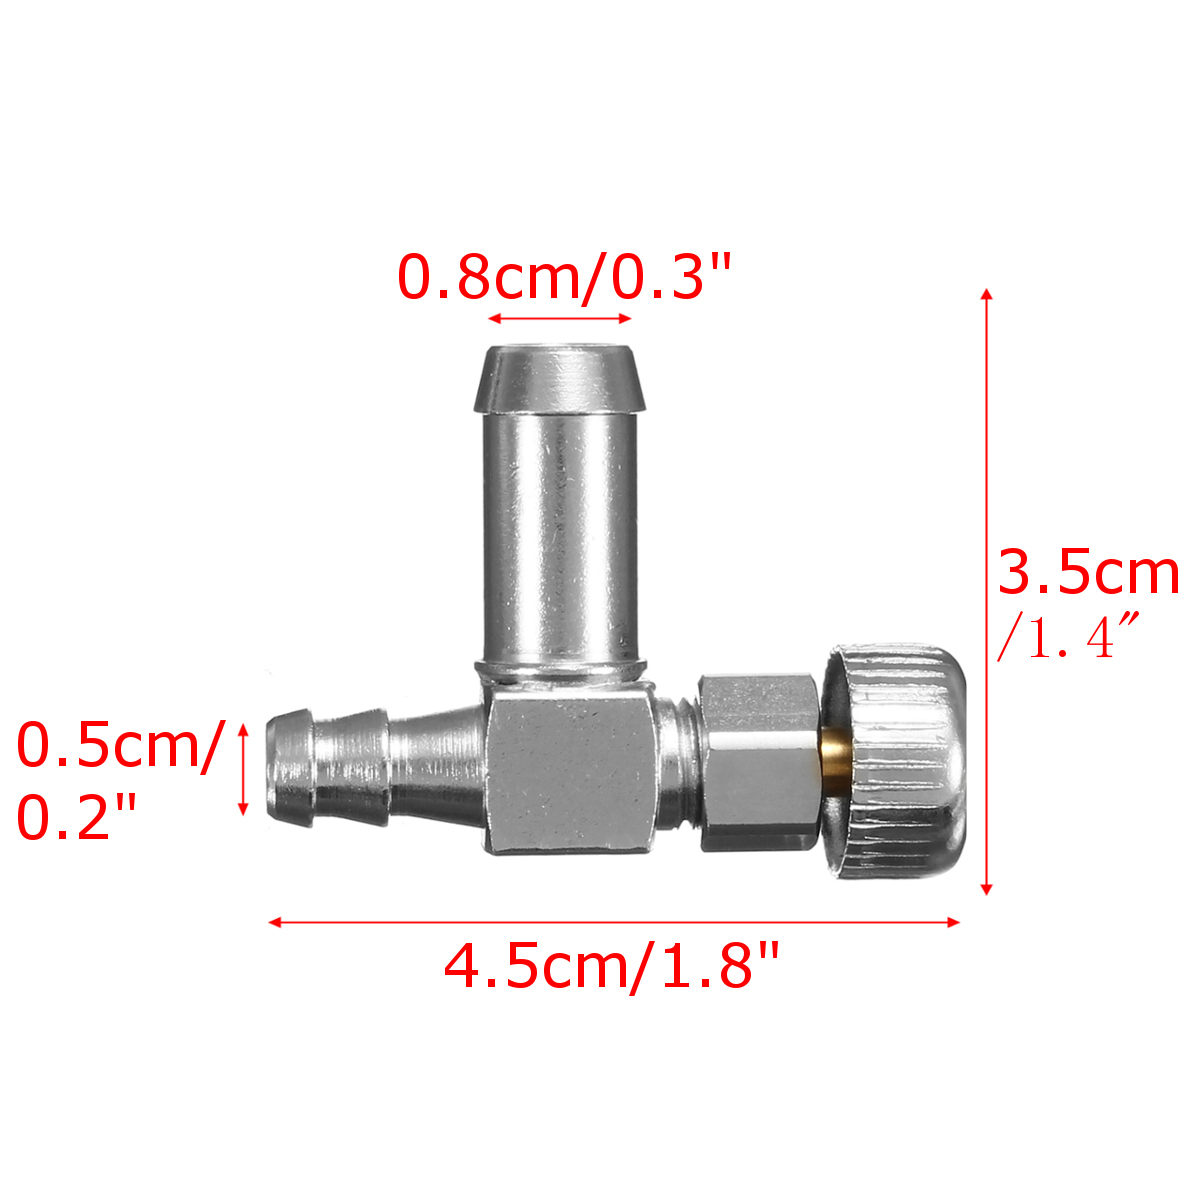 Metal-Fuel-Oil-Tank-Grommet-Shut-Off-Valve-Switch-for-Coleman-Generator-Parts-UB09-1372270